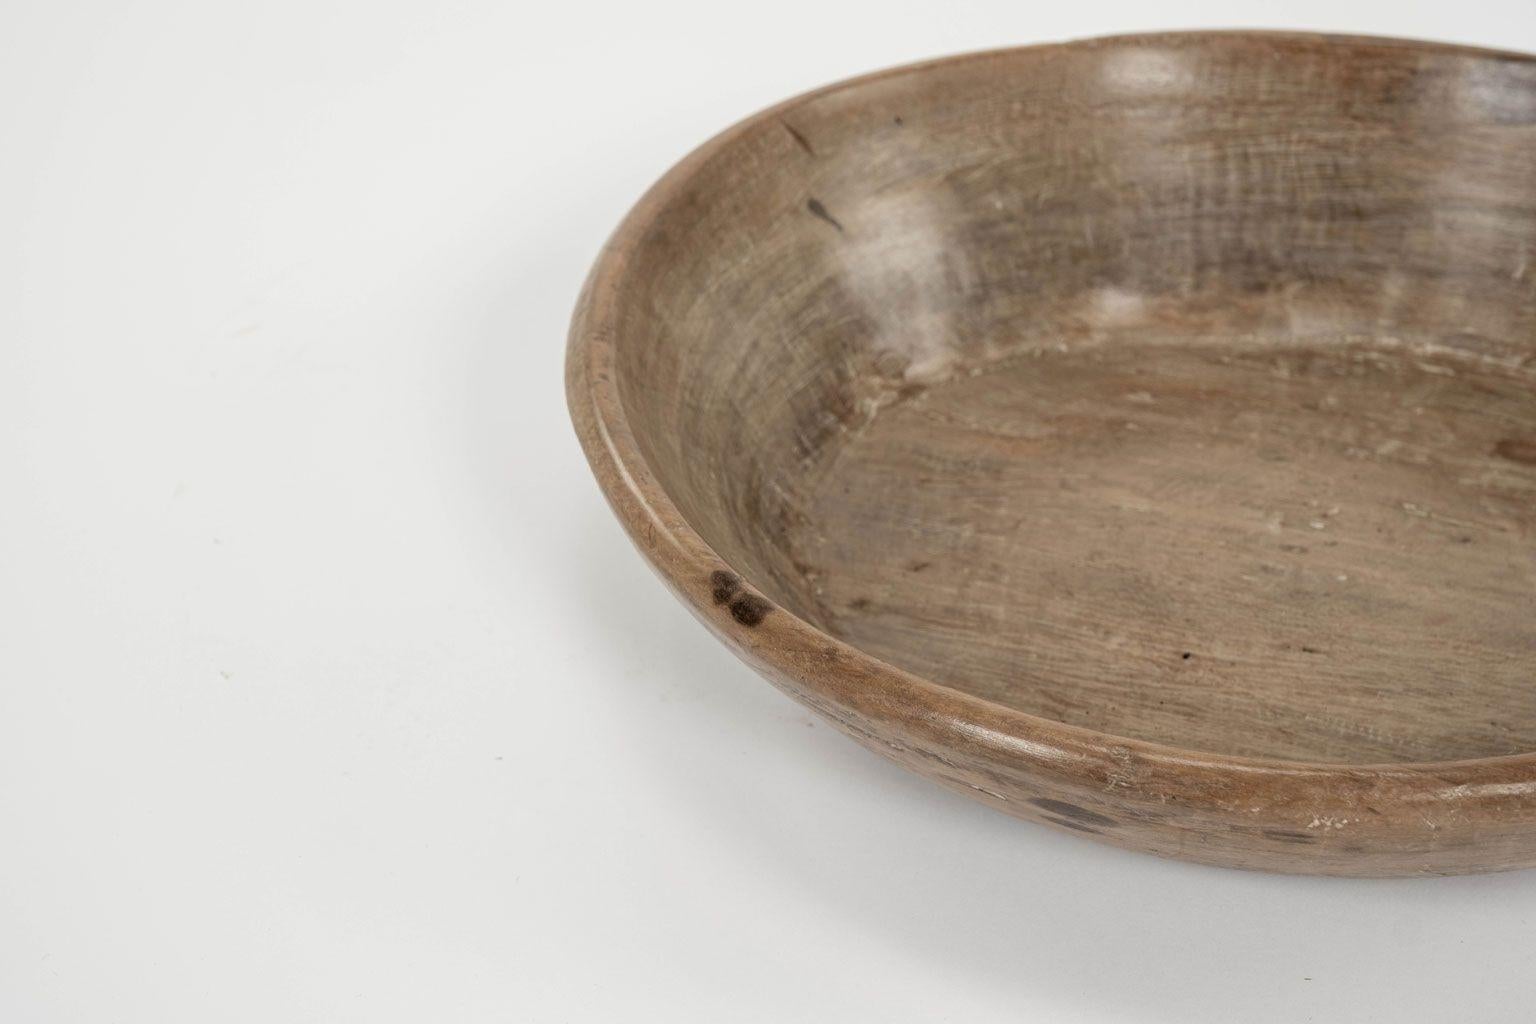 Hardwood Rustic Swedish Turned Wooden Bowl in Waxed Finish